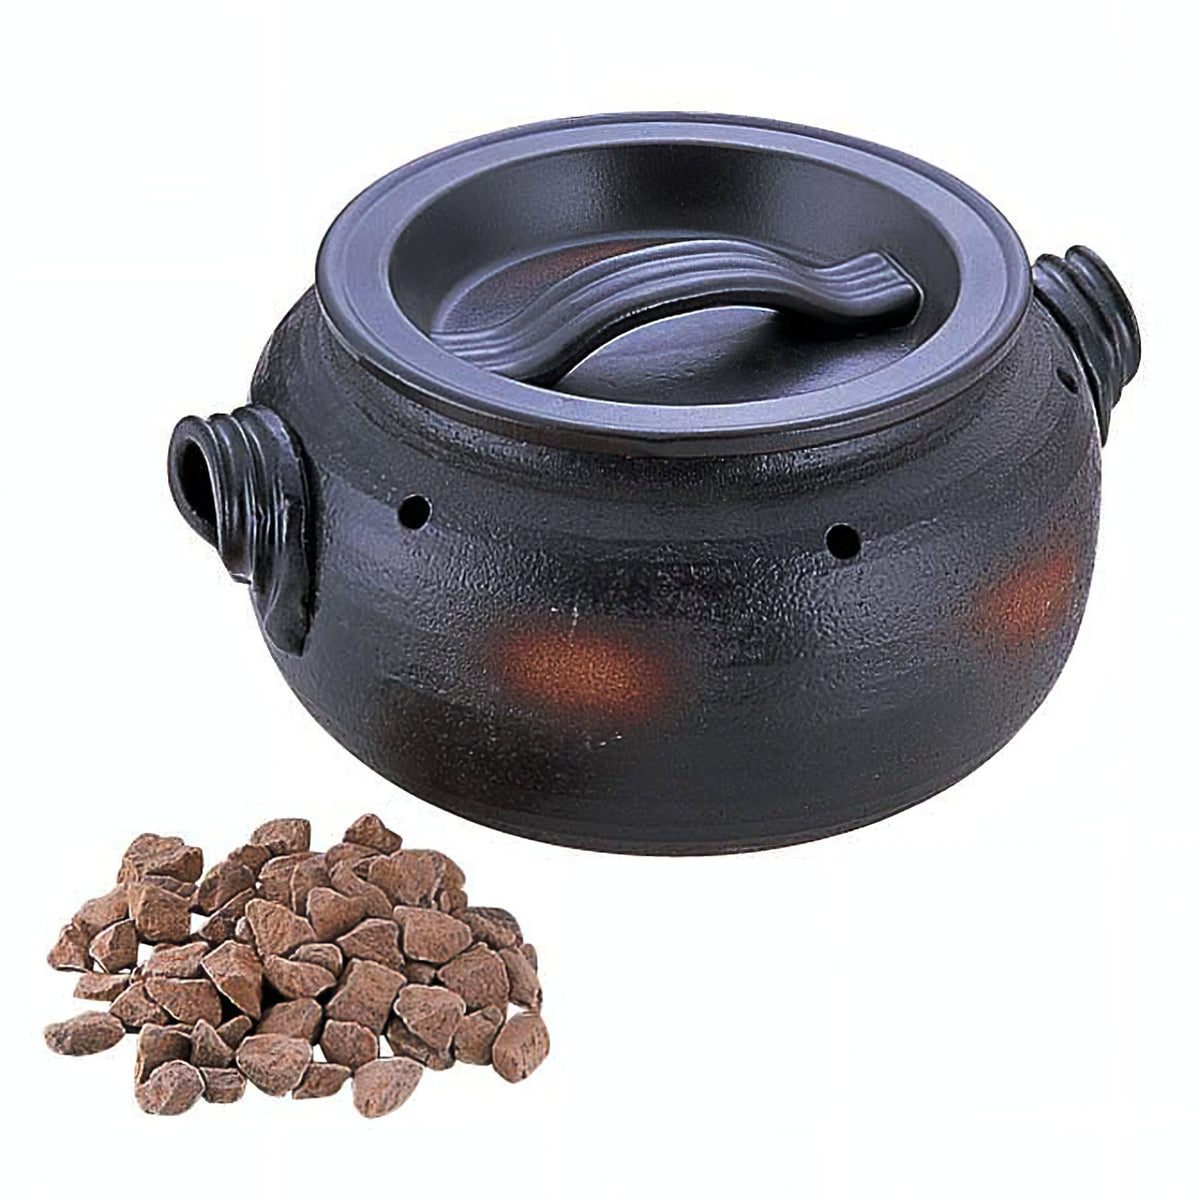 Asahisunred Banko Ware Ceramic Roasted Japanese Sweet Potato Pot